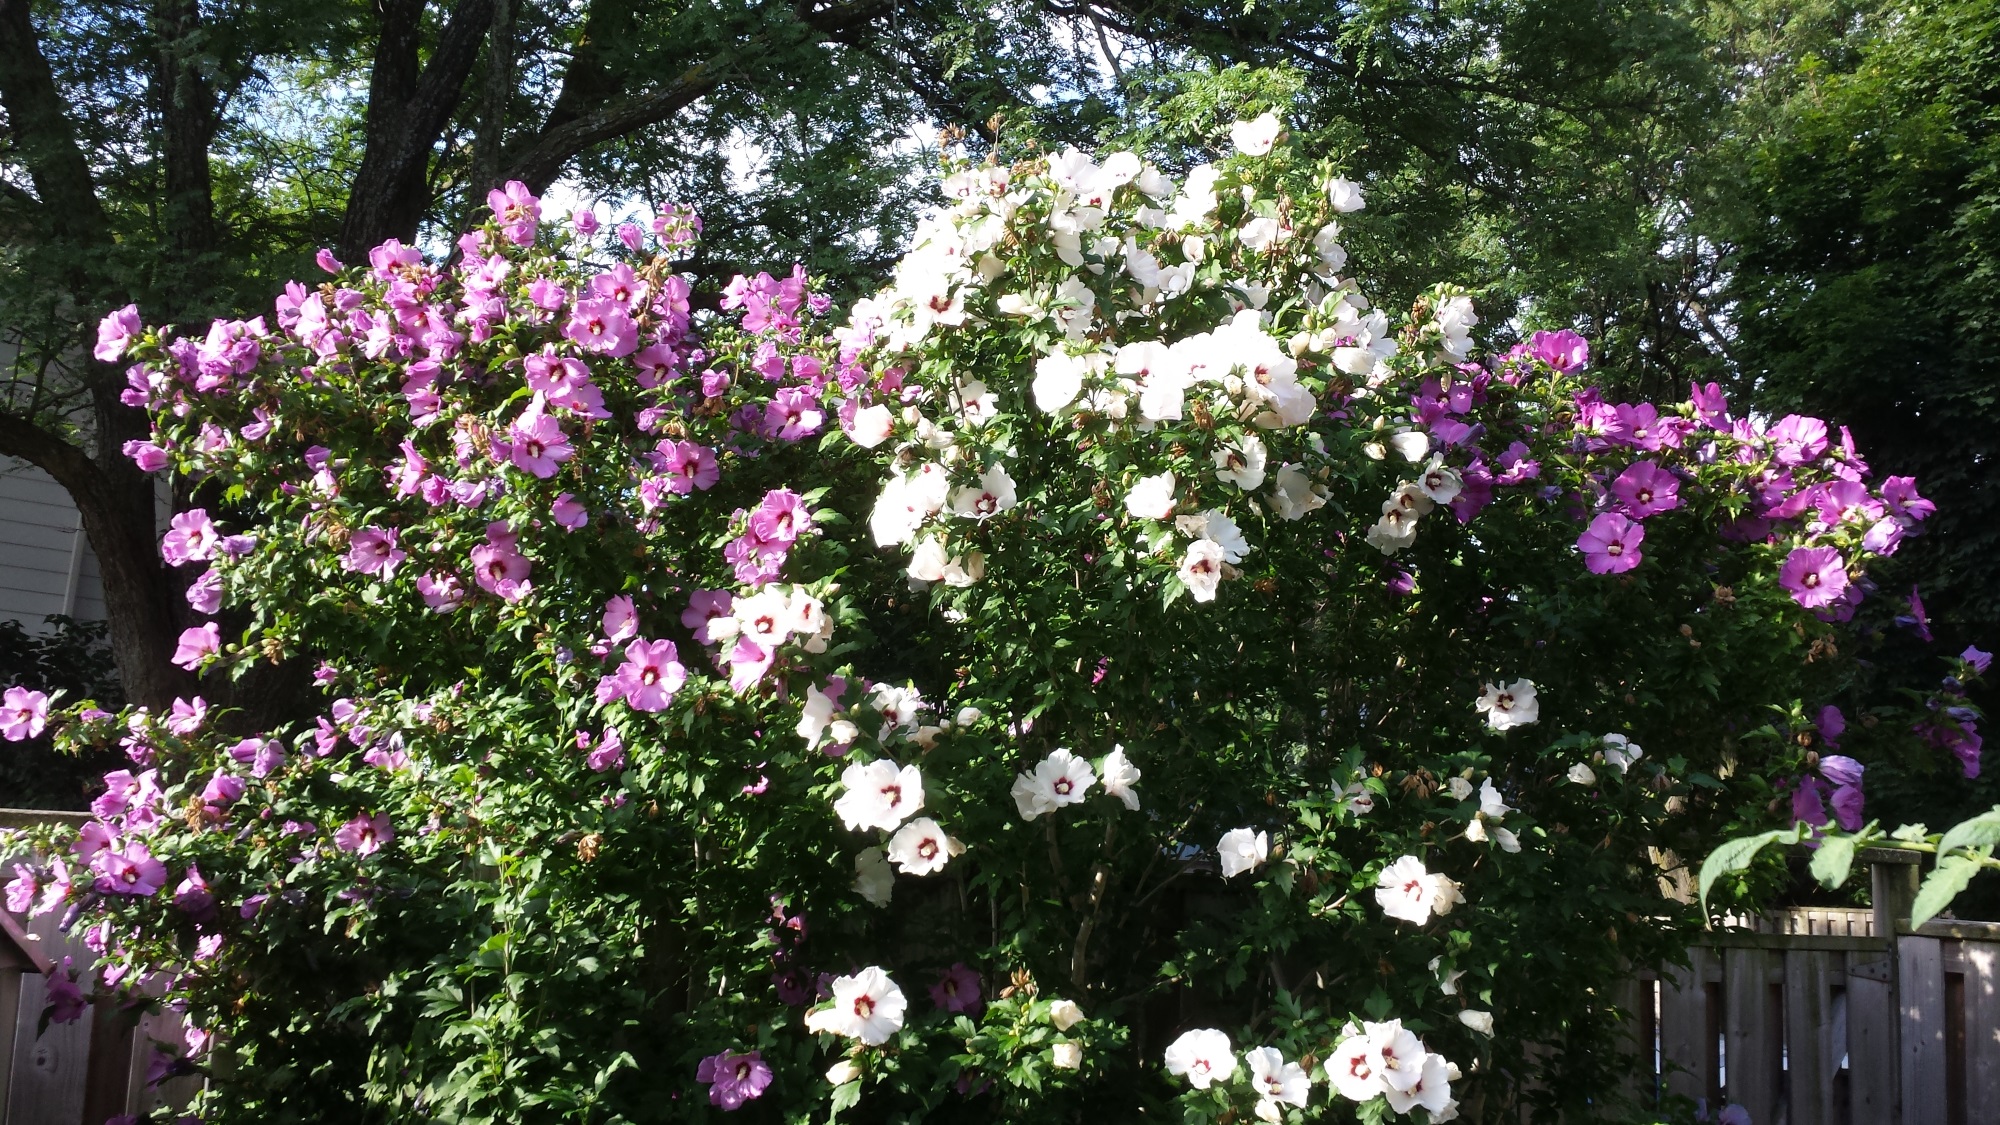 Rose of Sharon trees flowers in full peak bloom